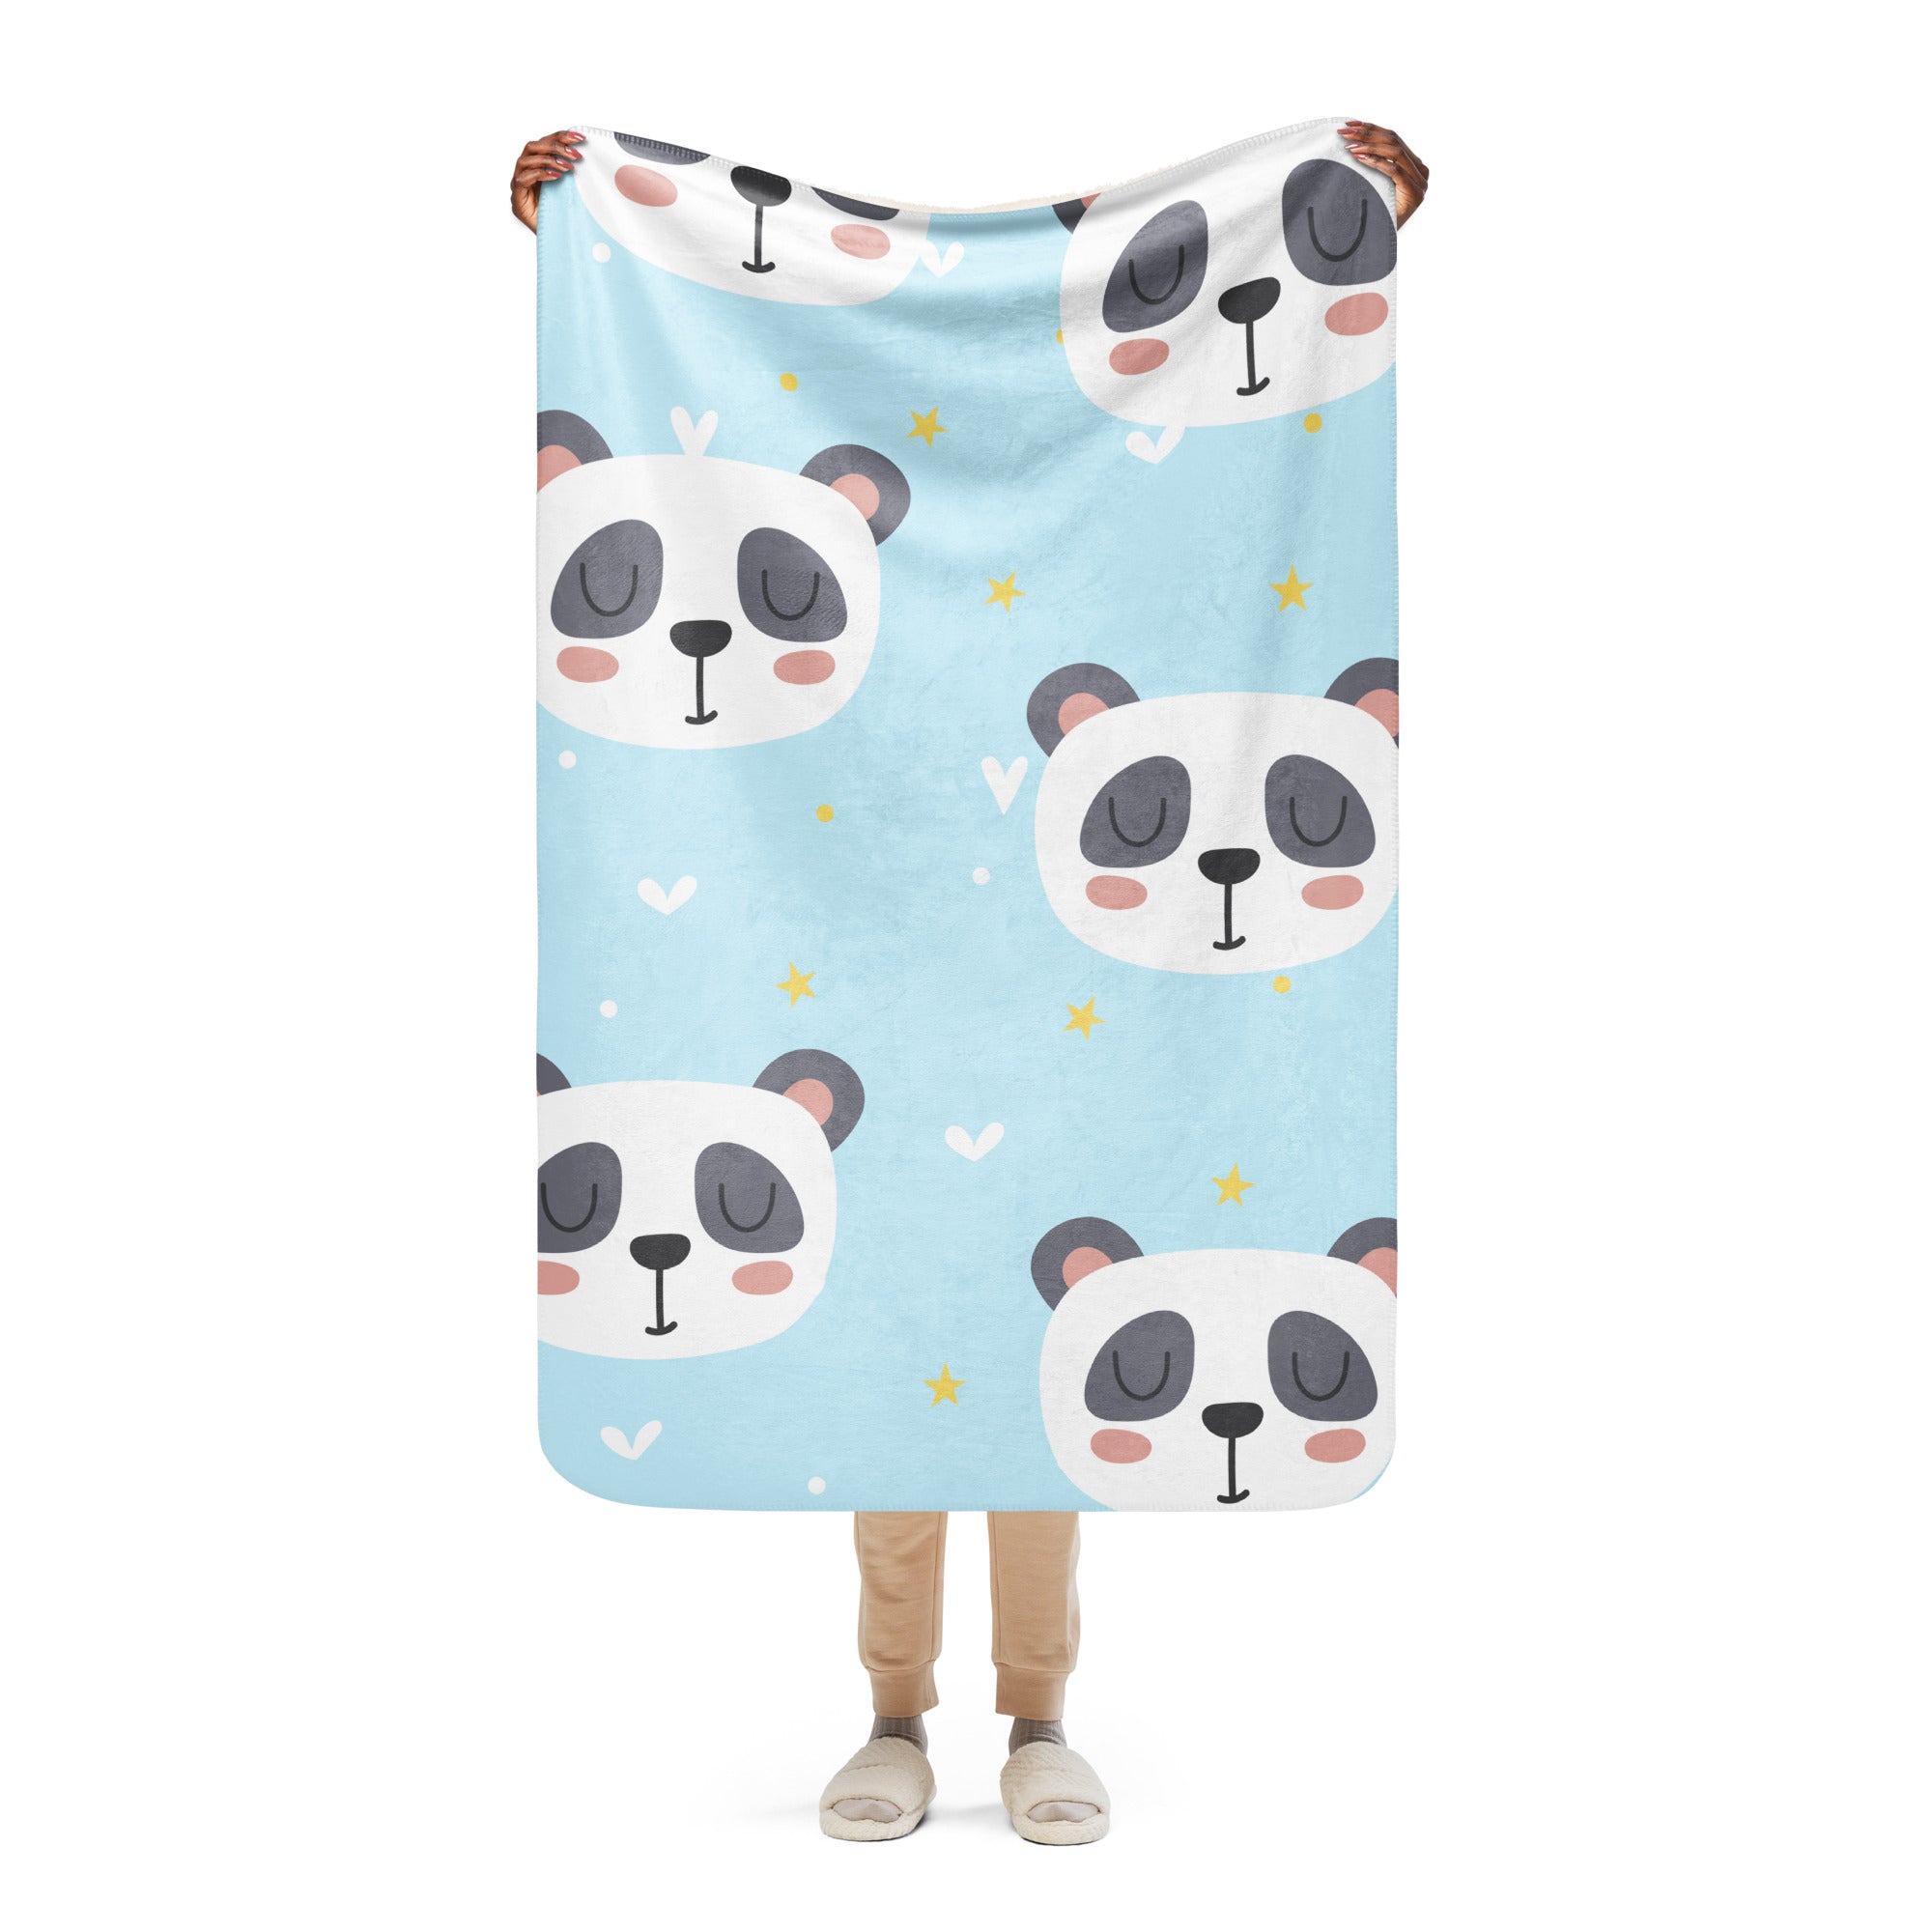 Cute Panda Sherpa blanket